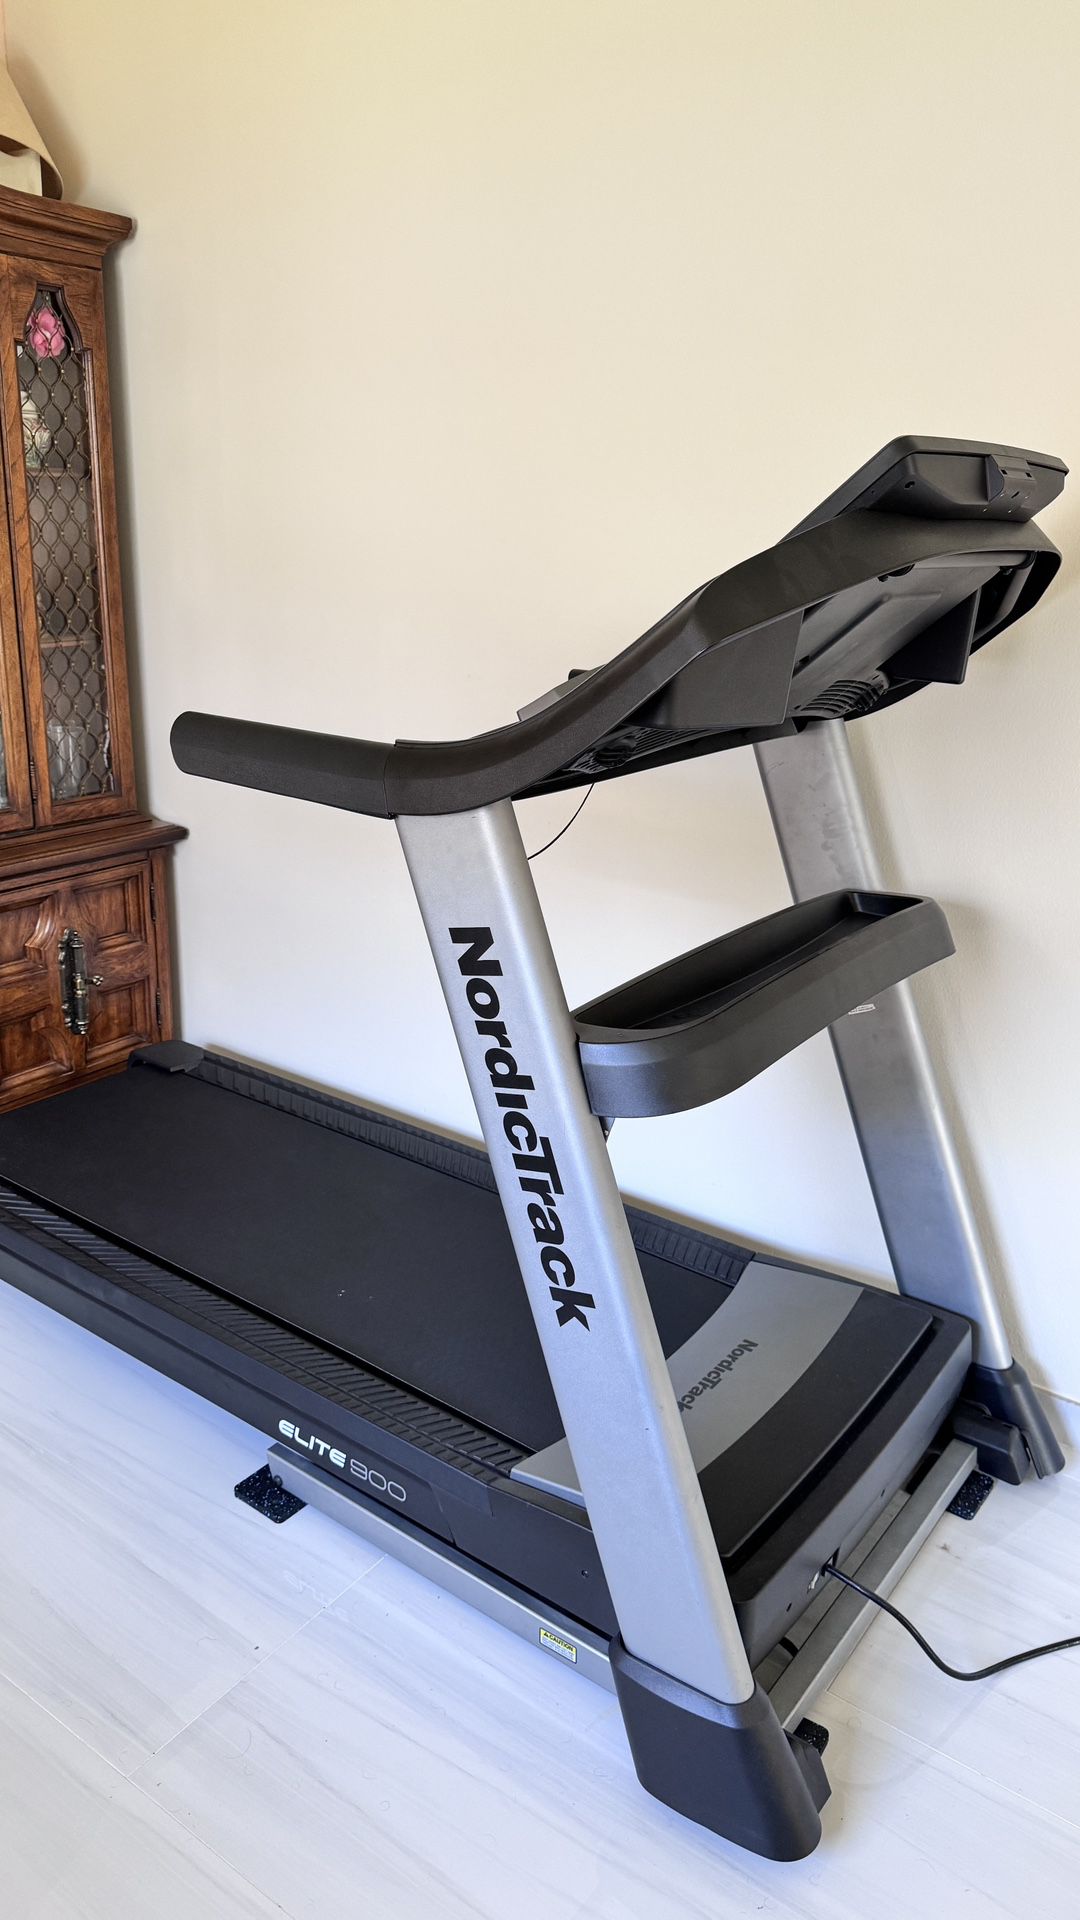 Nordictrack Elite 900 Treadmill